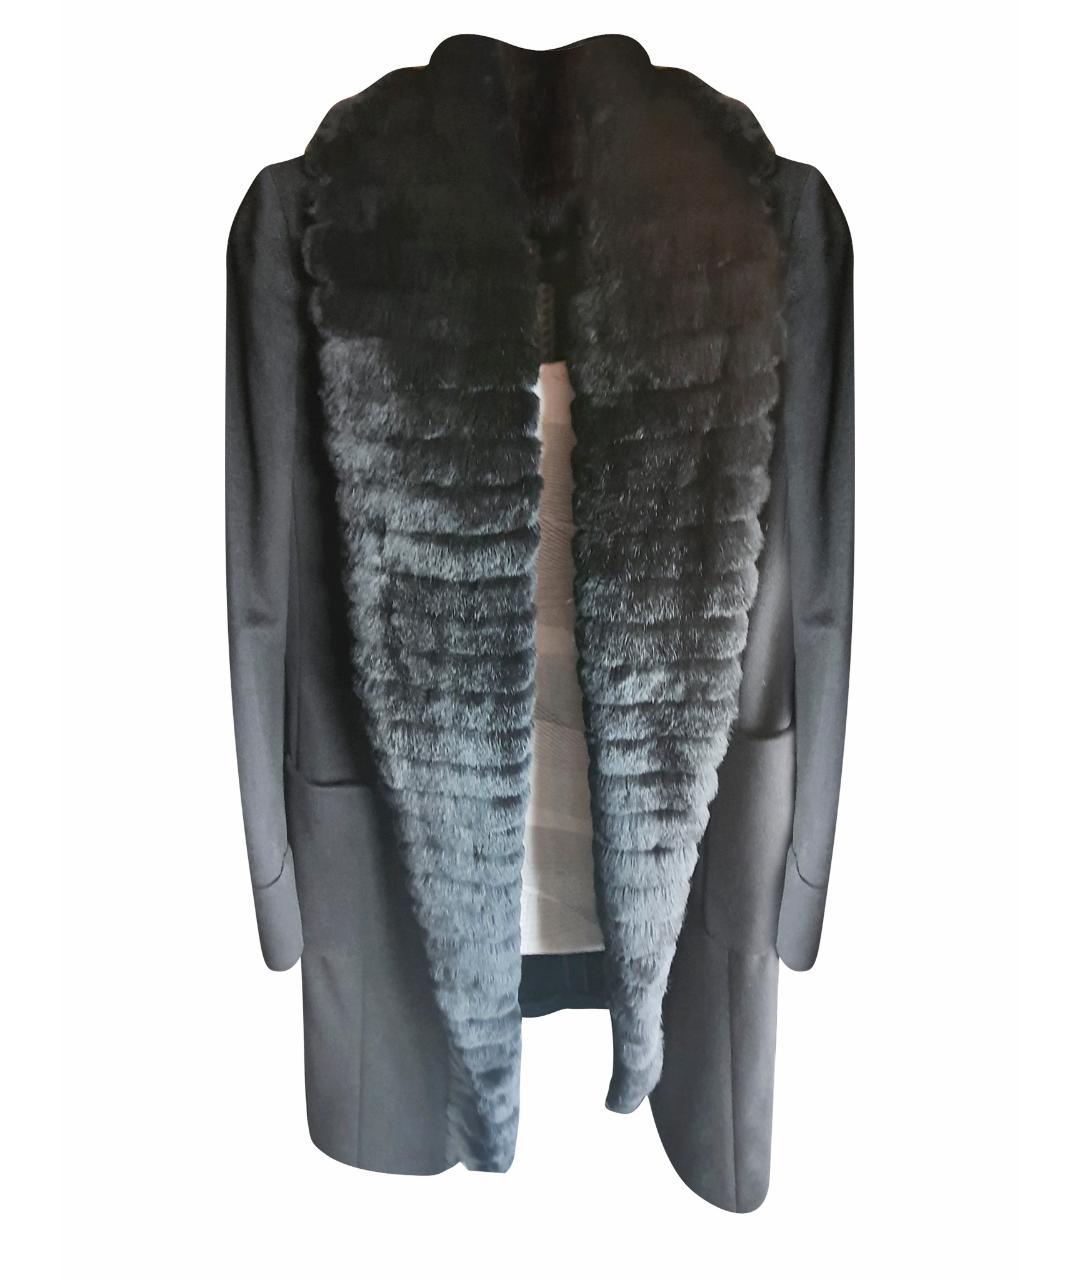 ARMANI COLLEZIONI Черное кашемировое пальто, фото 1